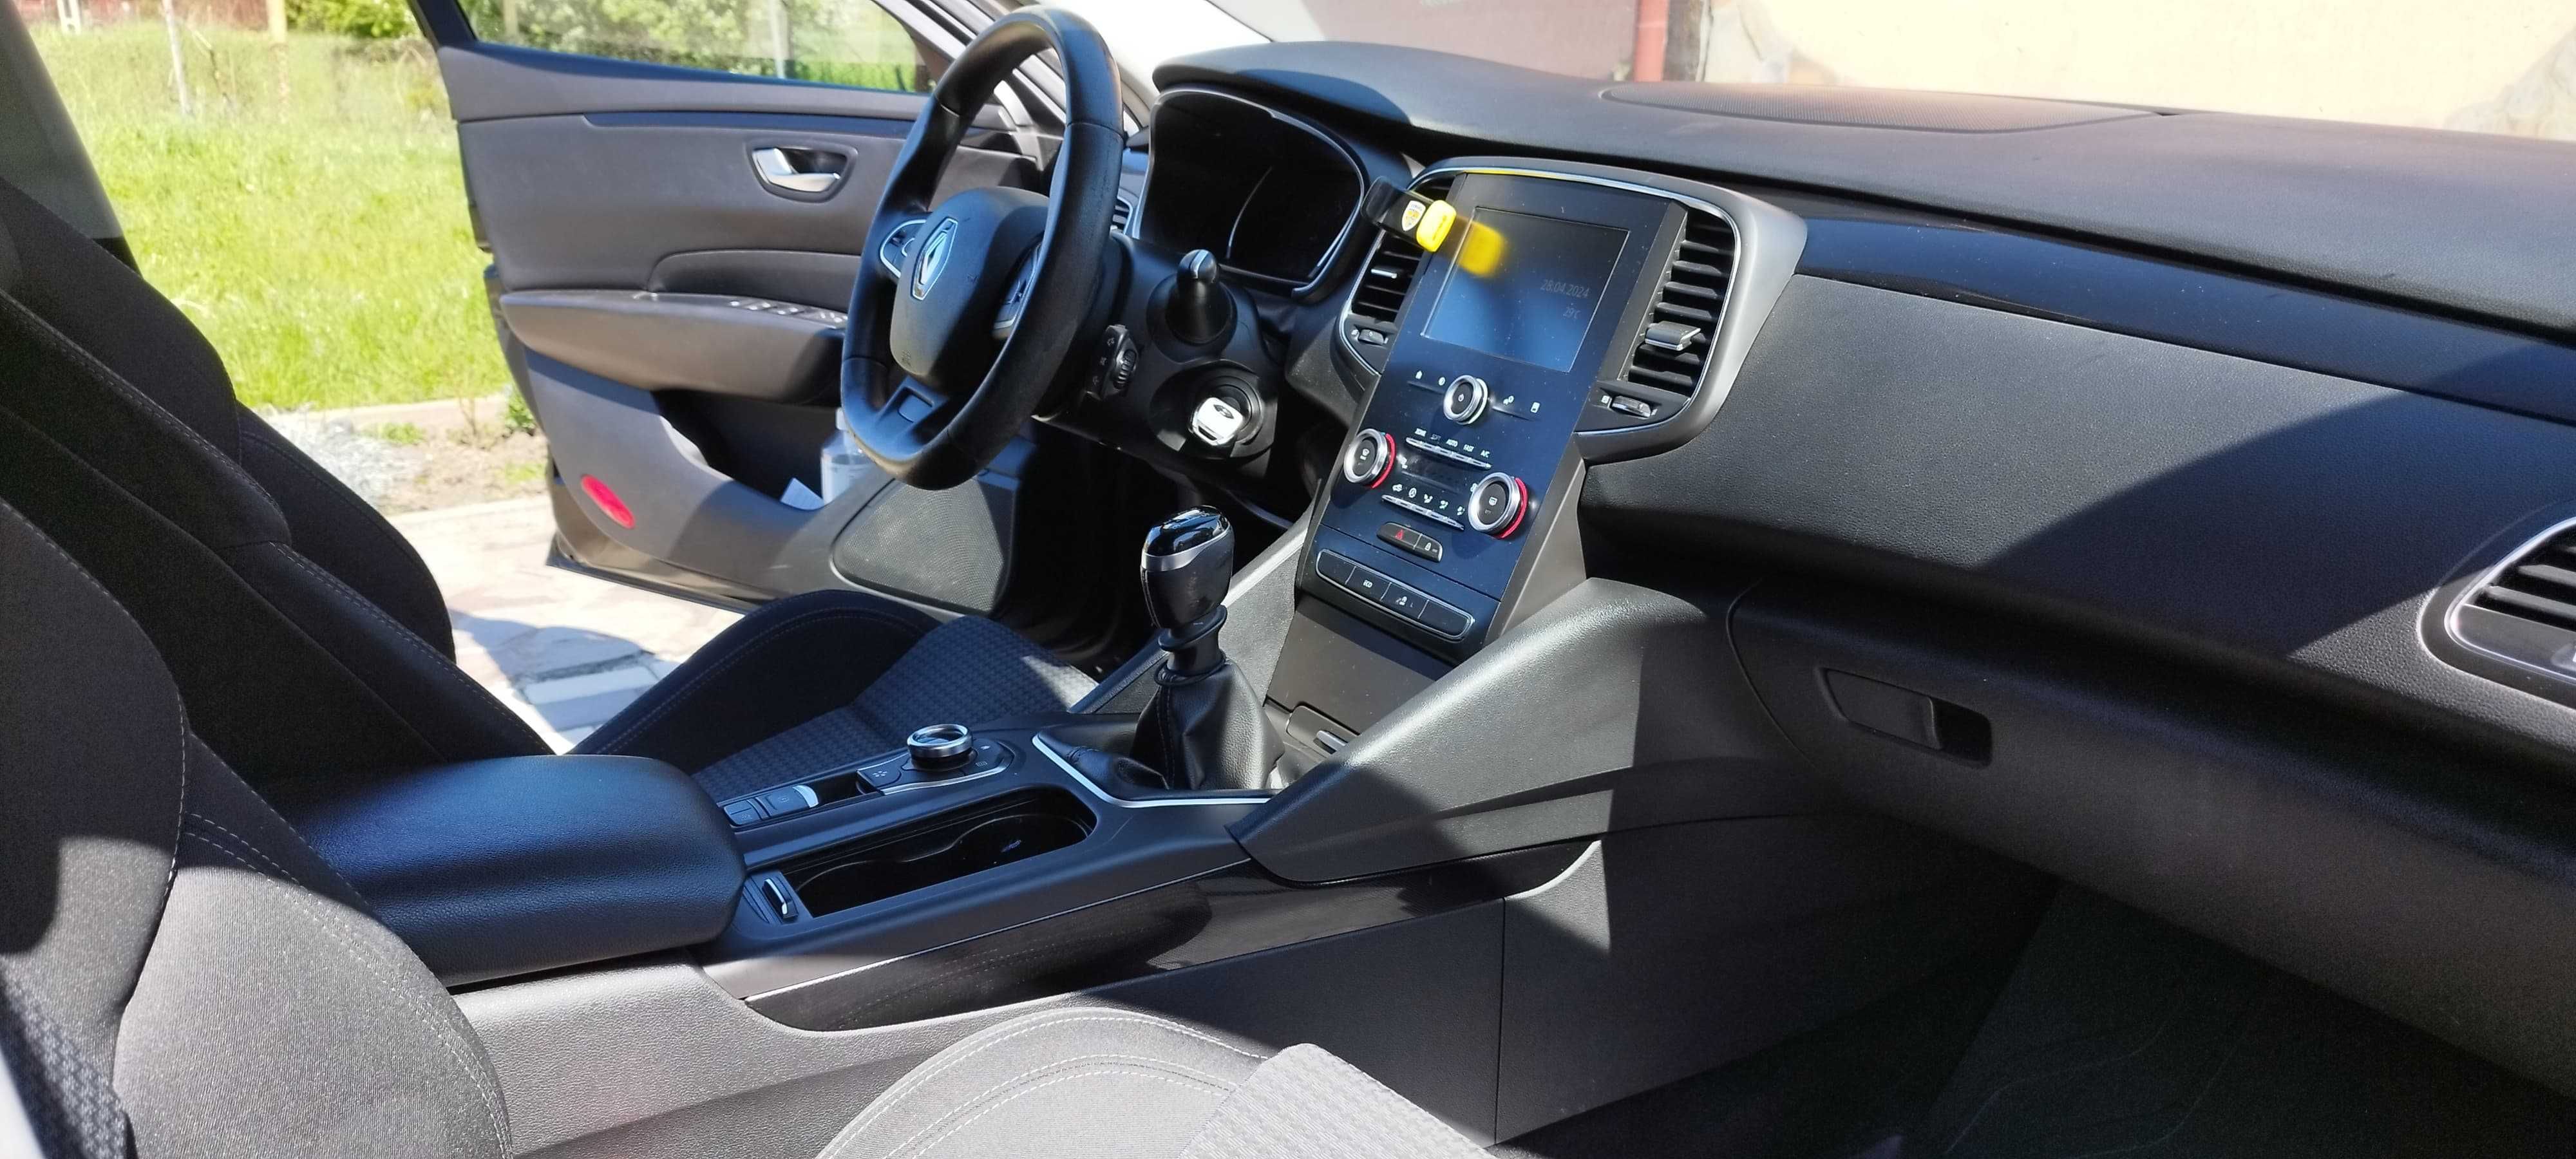 De vanzare! Ocazie Unica: Vanzare Renault Talisman  (iunie 2016)